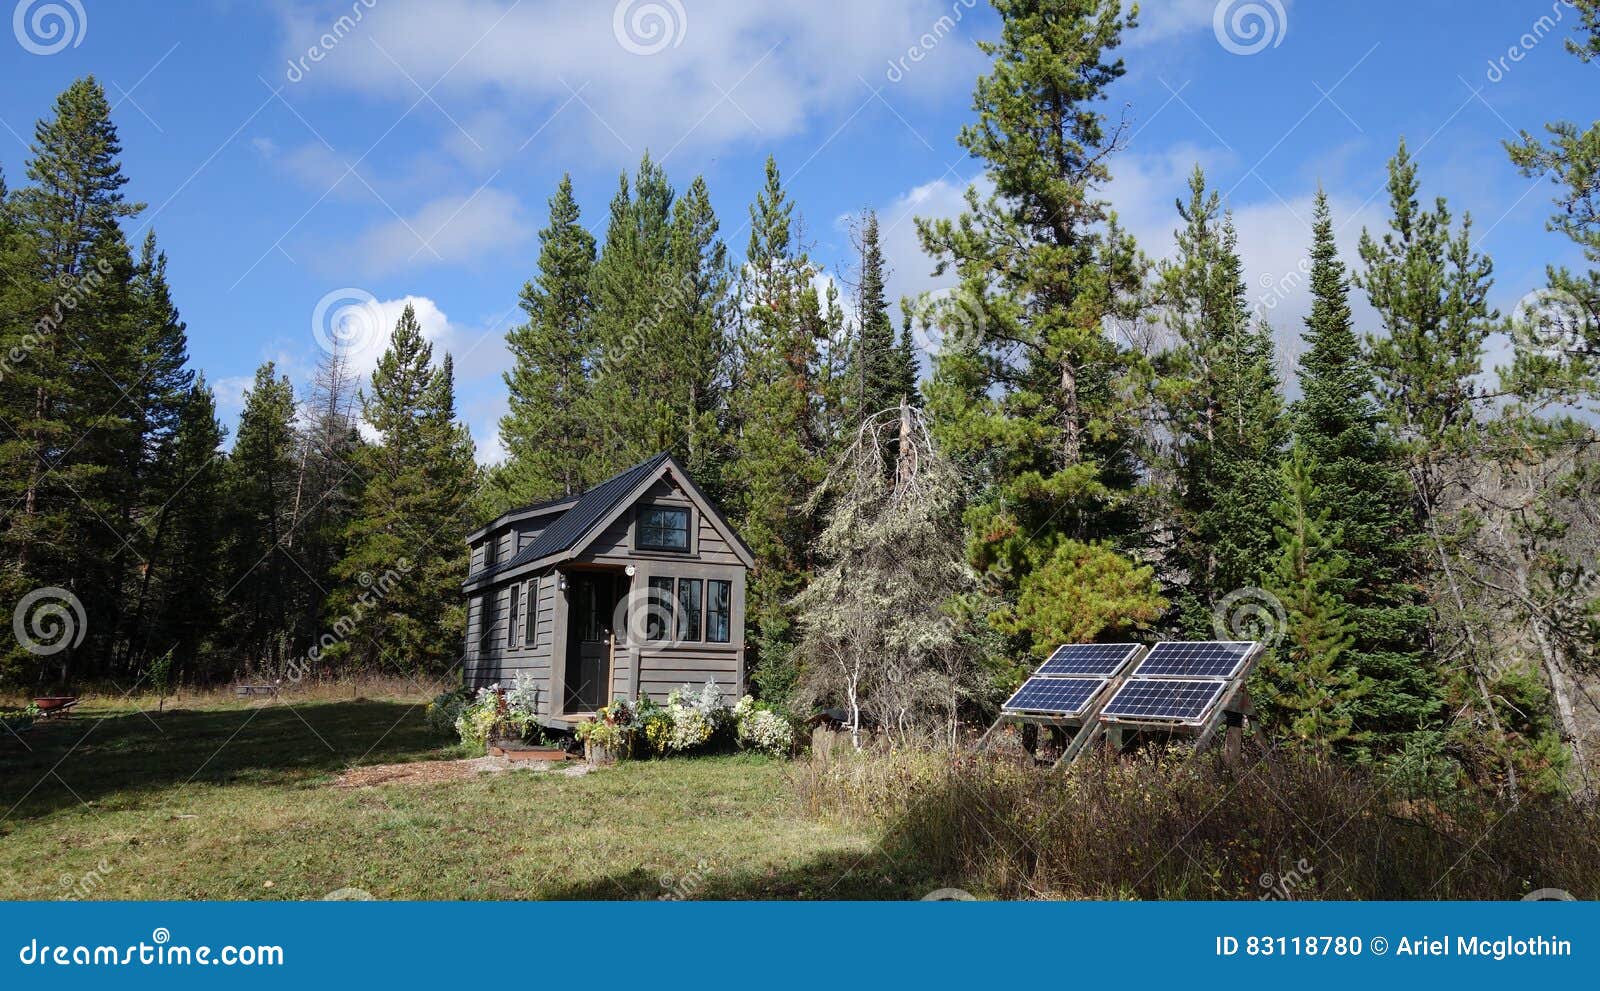 off grid tiny house